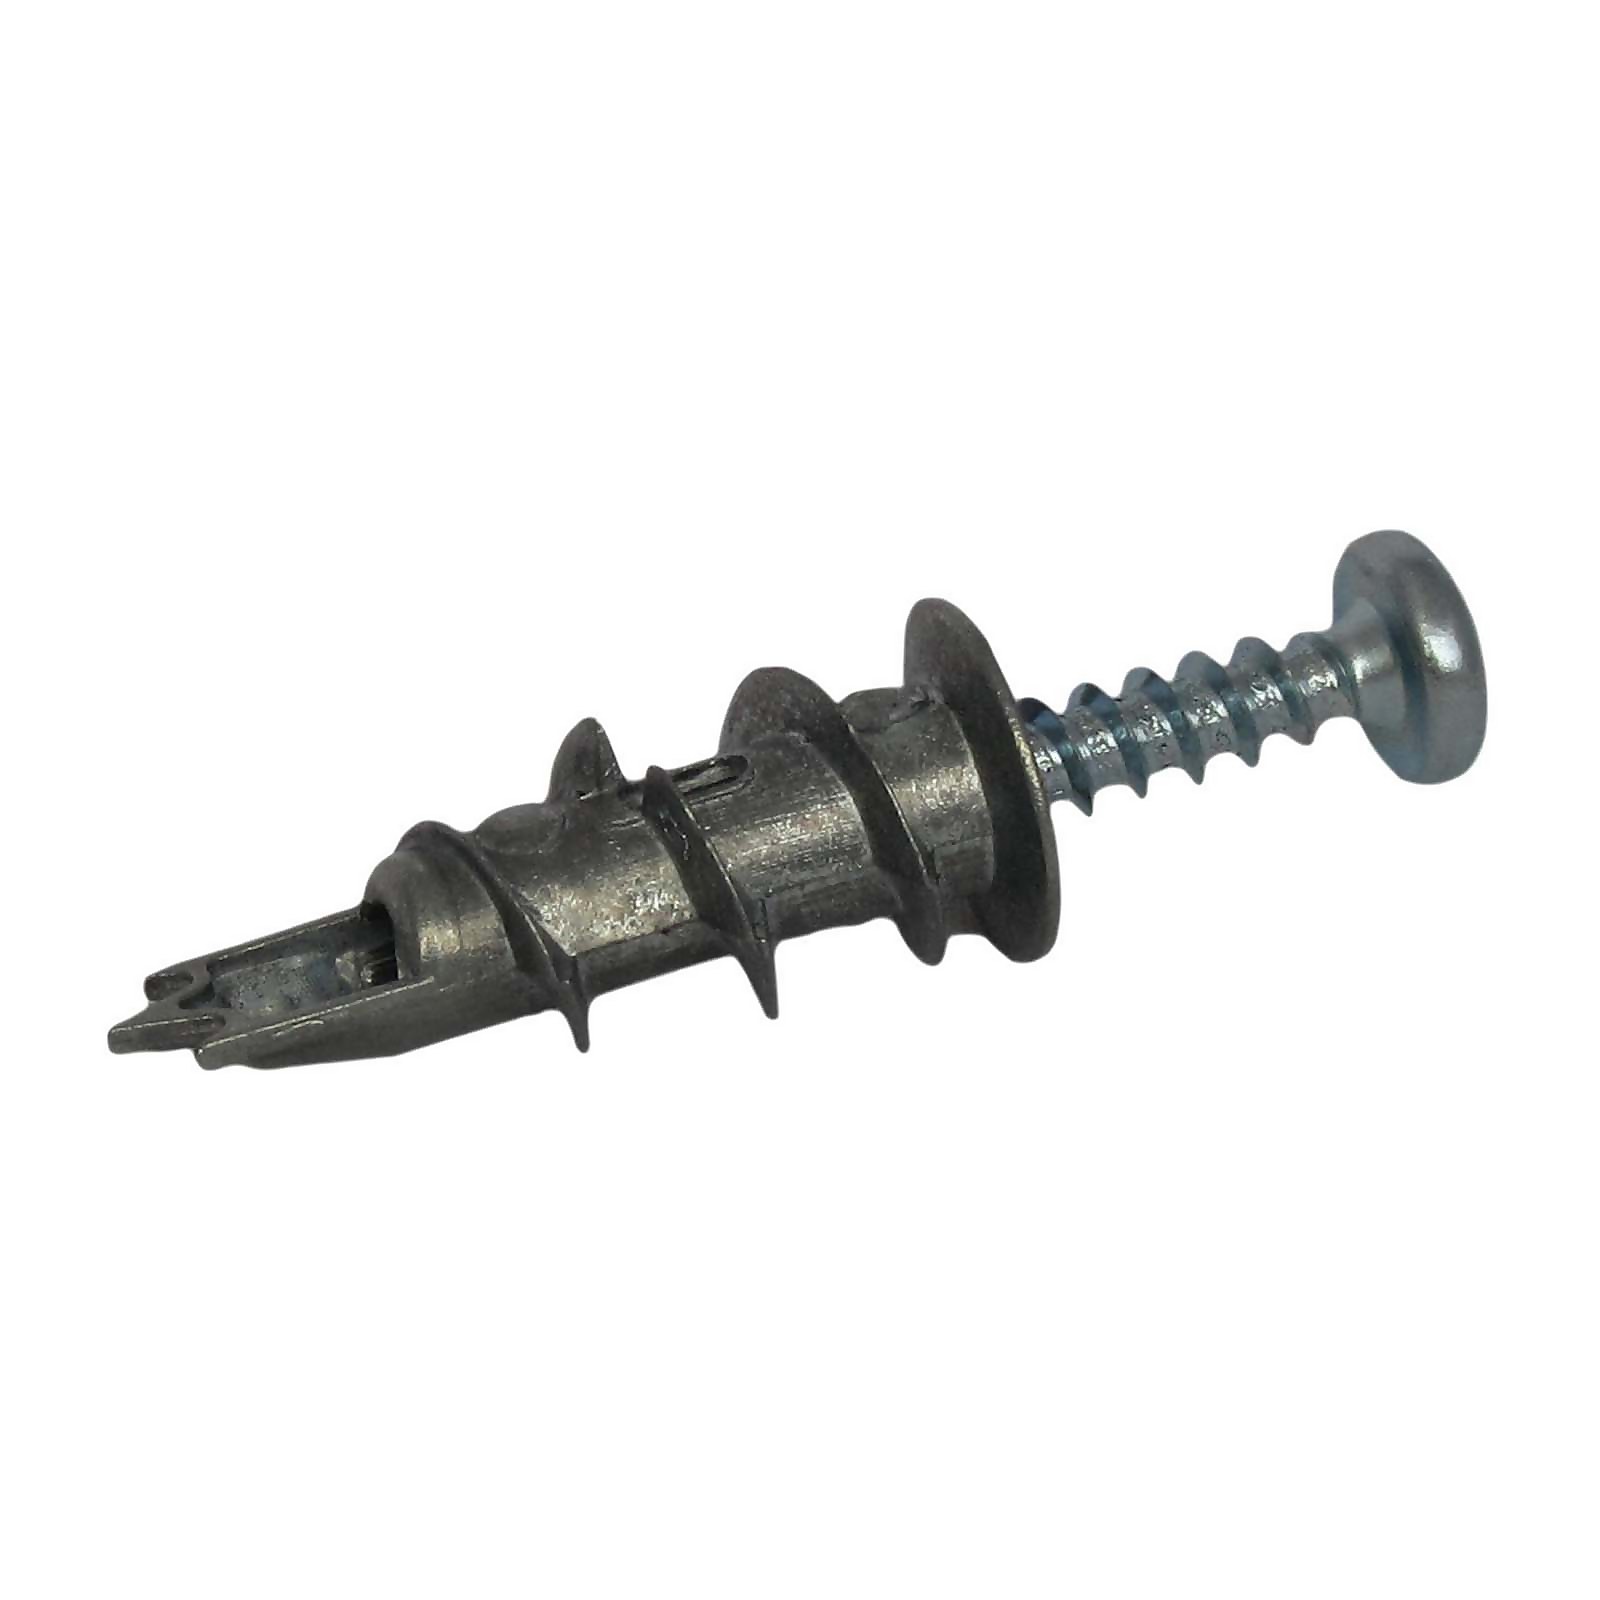 Photo of Rawlplug Metal Self Drill Fixing - Pack Of 12